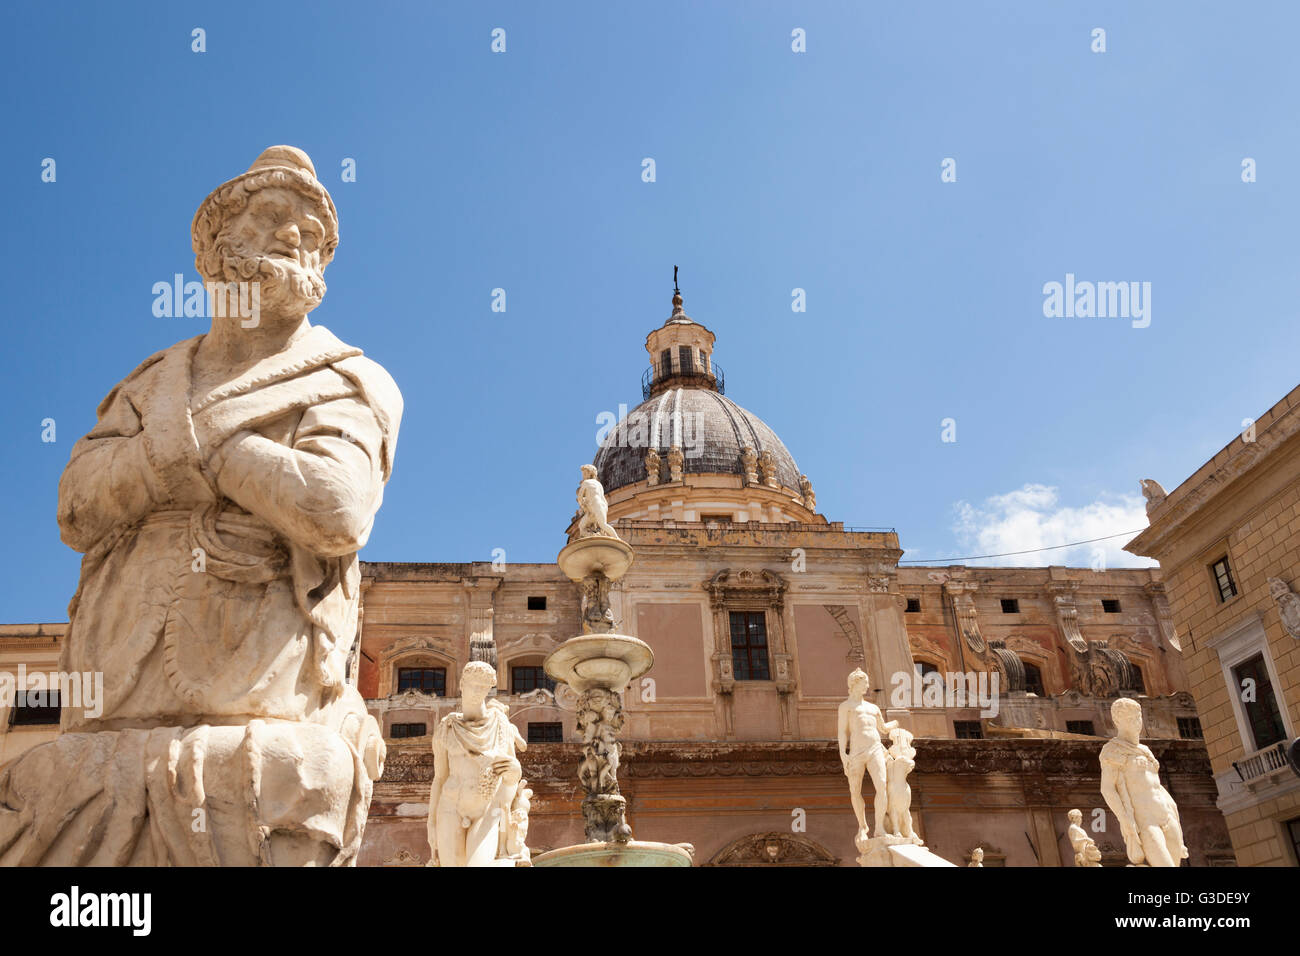 Fontana Pretoria et statues de l'église de Santa Caterina, la Piazza Pretoria, Palerme, Sicile, Italie Banque D'Images